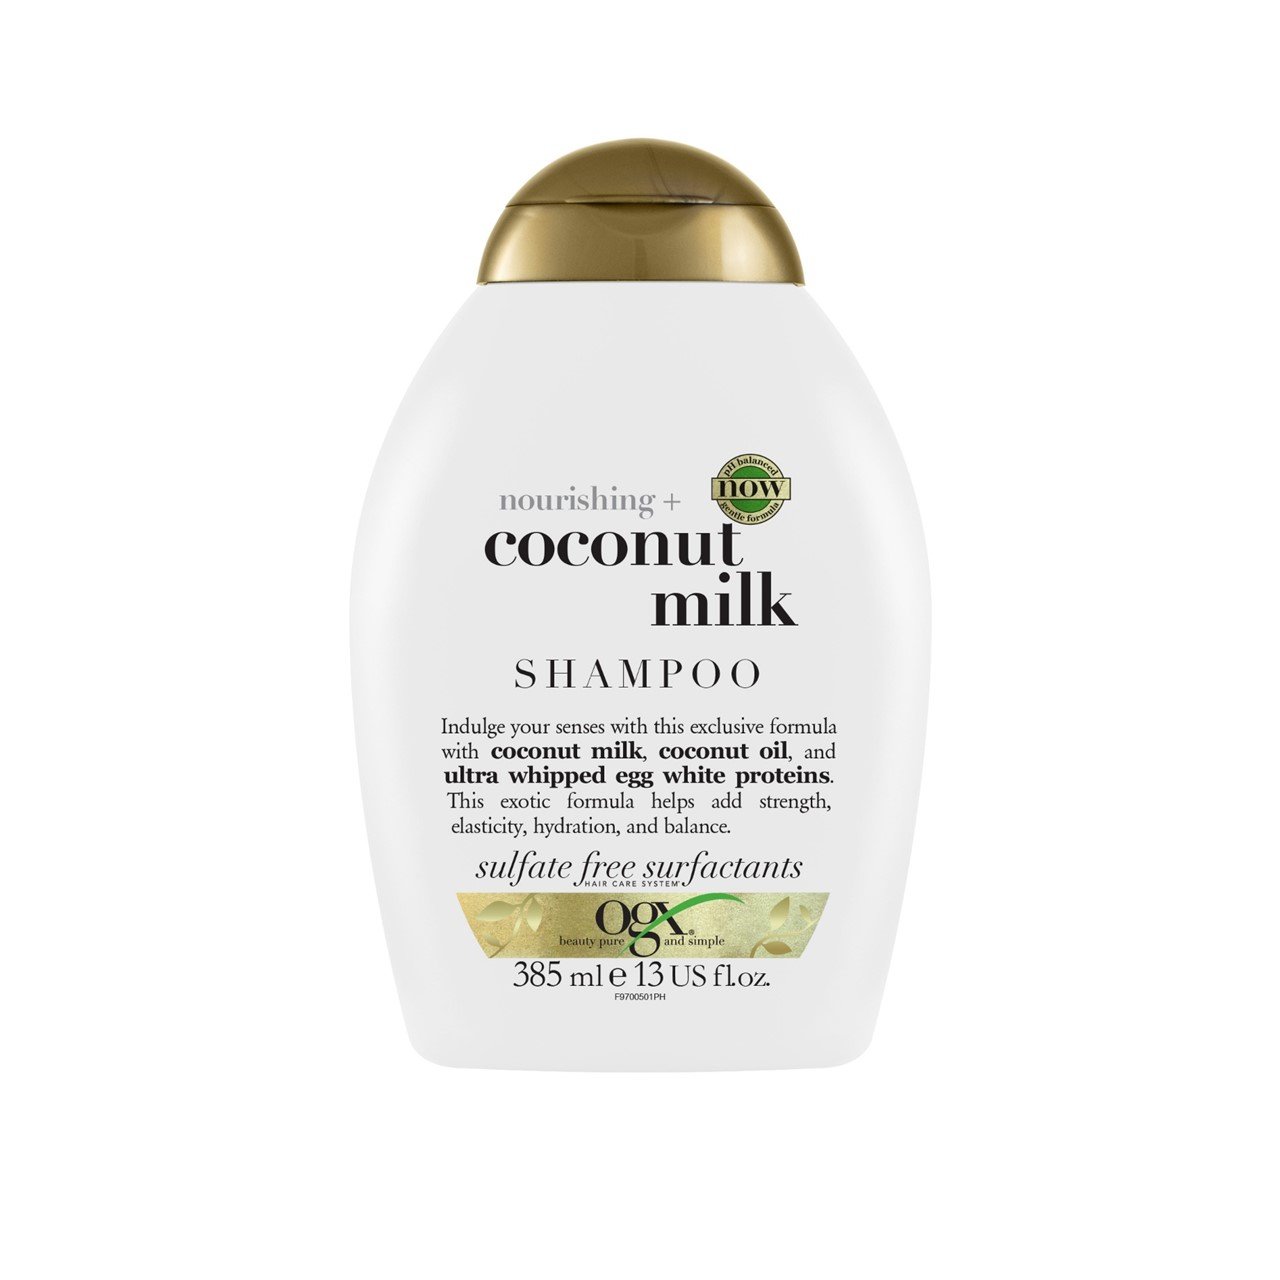 https://static.beautytocare.com/cdn-cgi/image/width=1600,height=1600,f=auto/media/catalog/product//o/g/ogx-nourishing-coconut-milk-shampoo-385ml.jpg